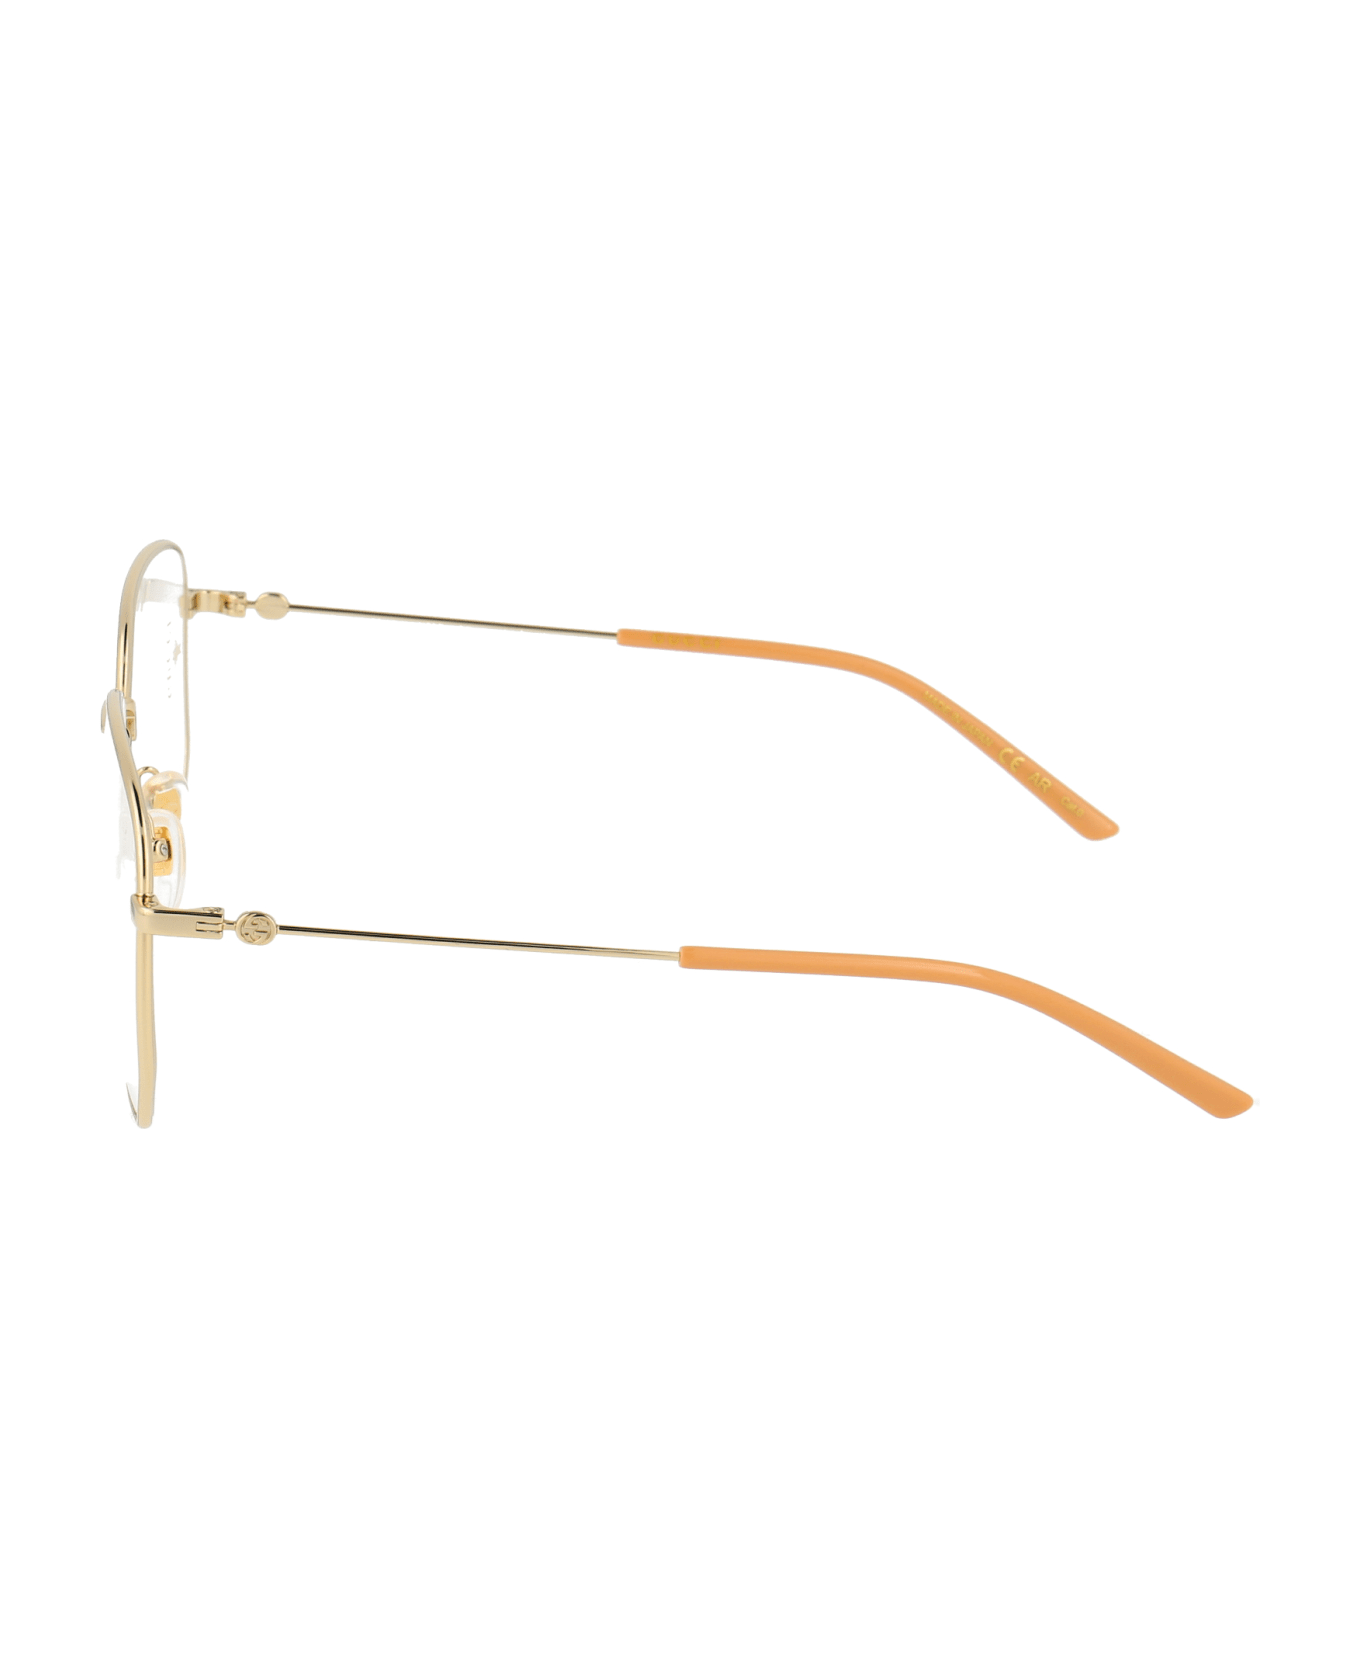 Gucci Eyewear Gg0396s Sunglasses - 001 GOLD GOLD TRANSPARENT